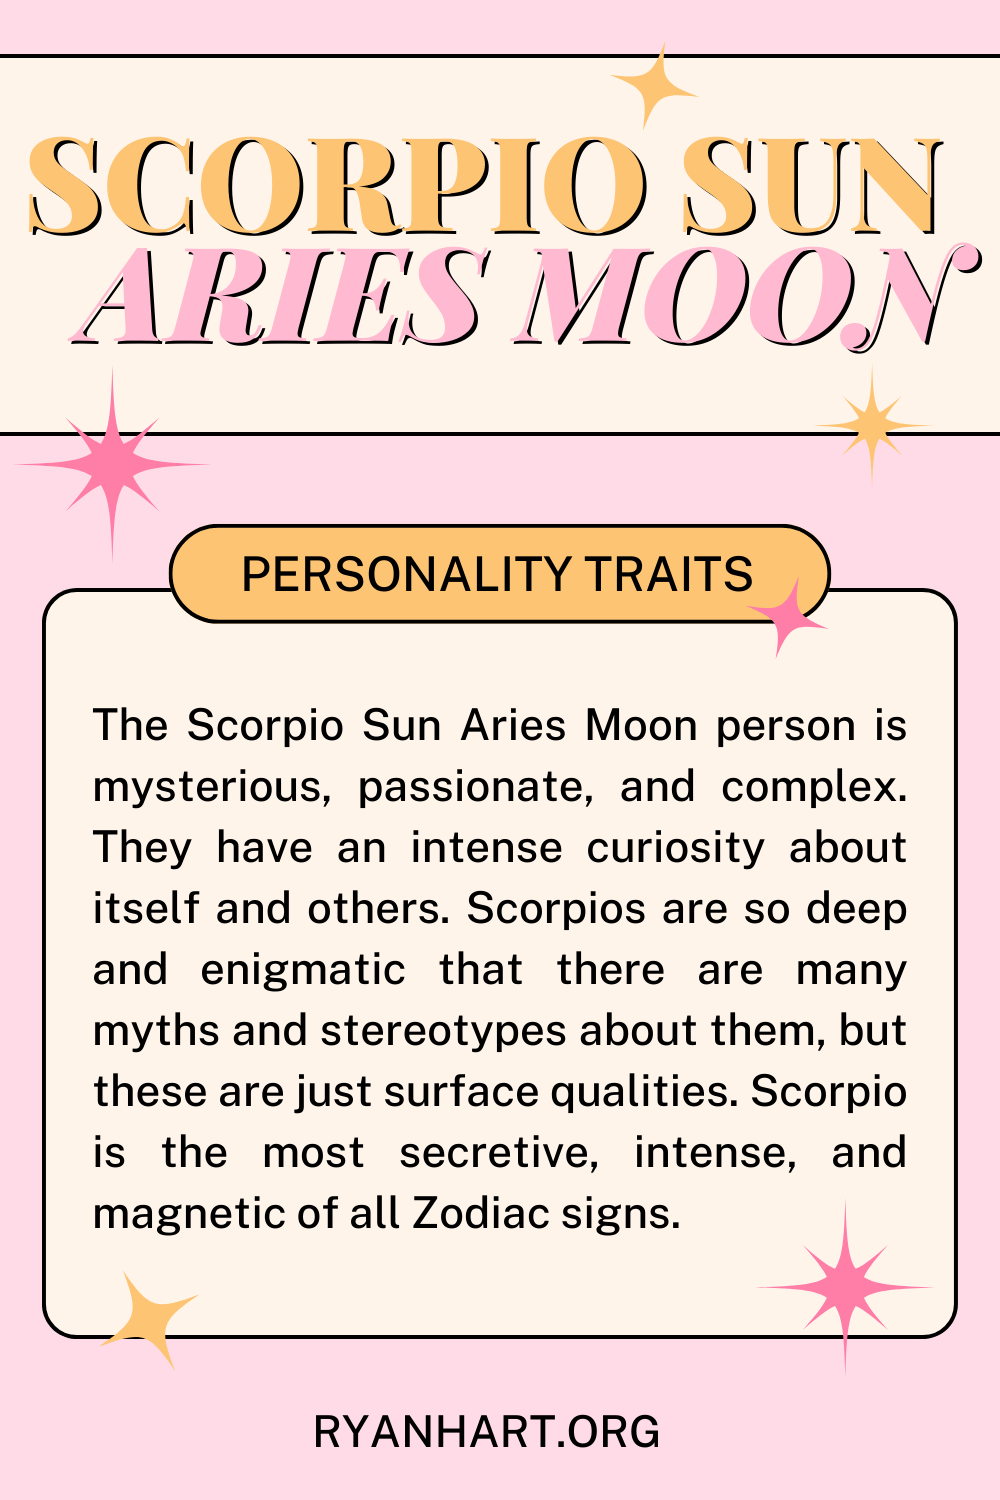 Scorpio Sun Aries Moon Description